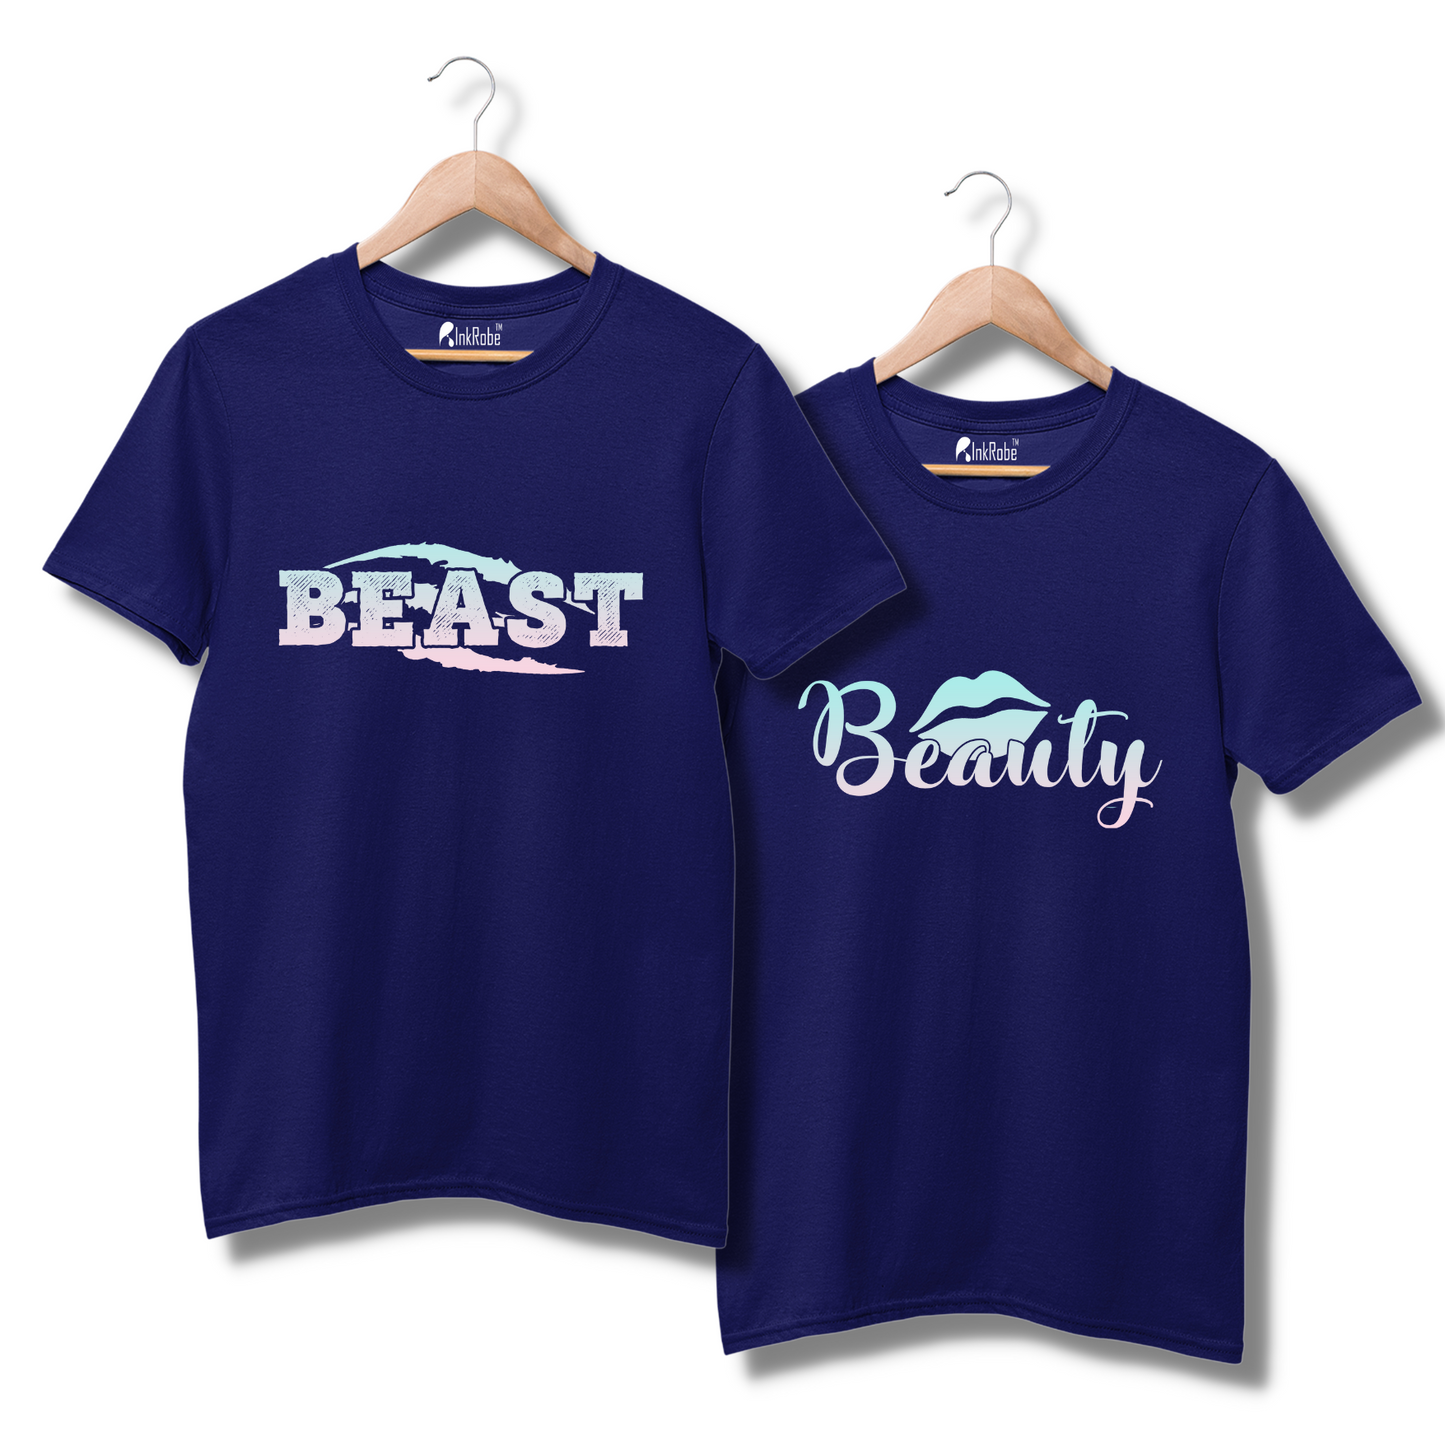 Beauty & The Beast Couple Tshirt